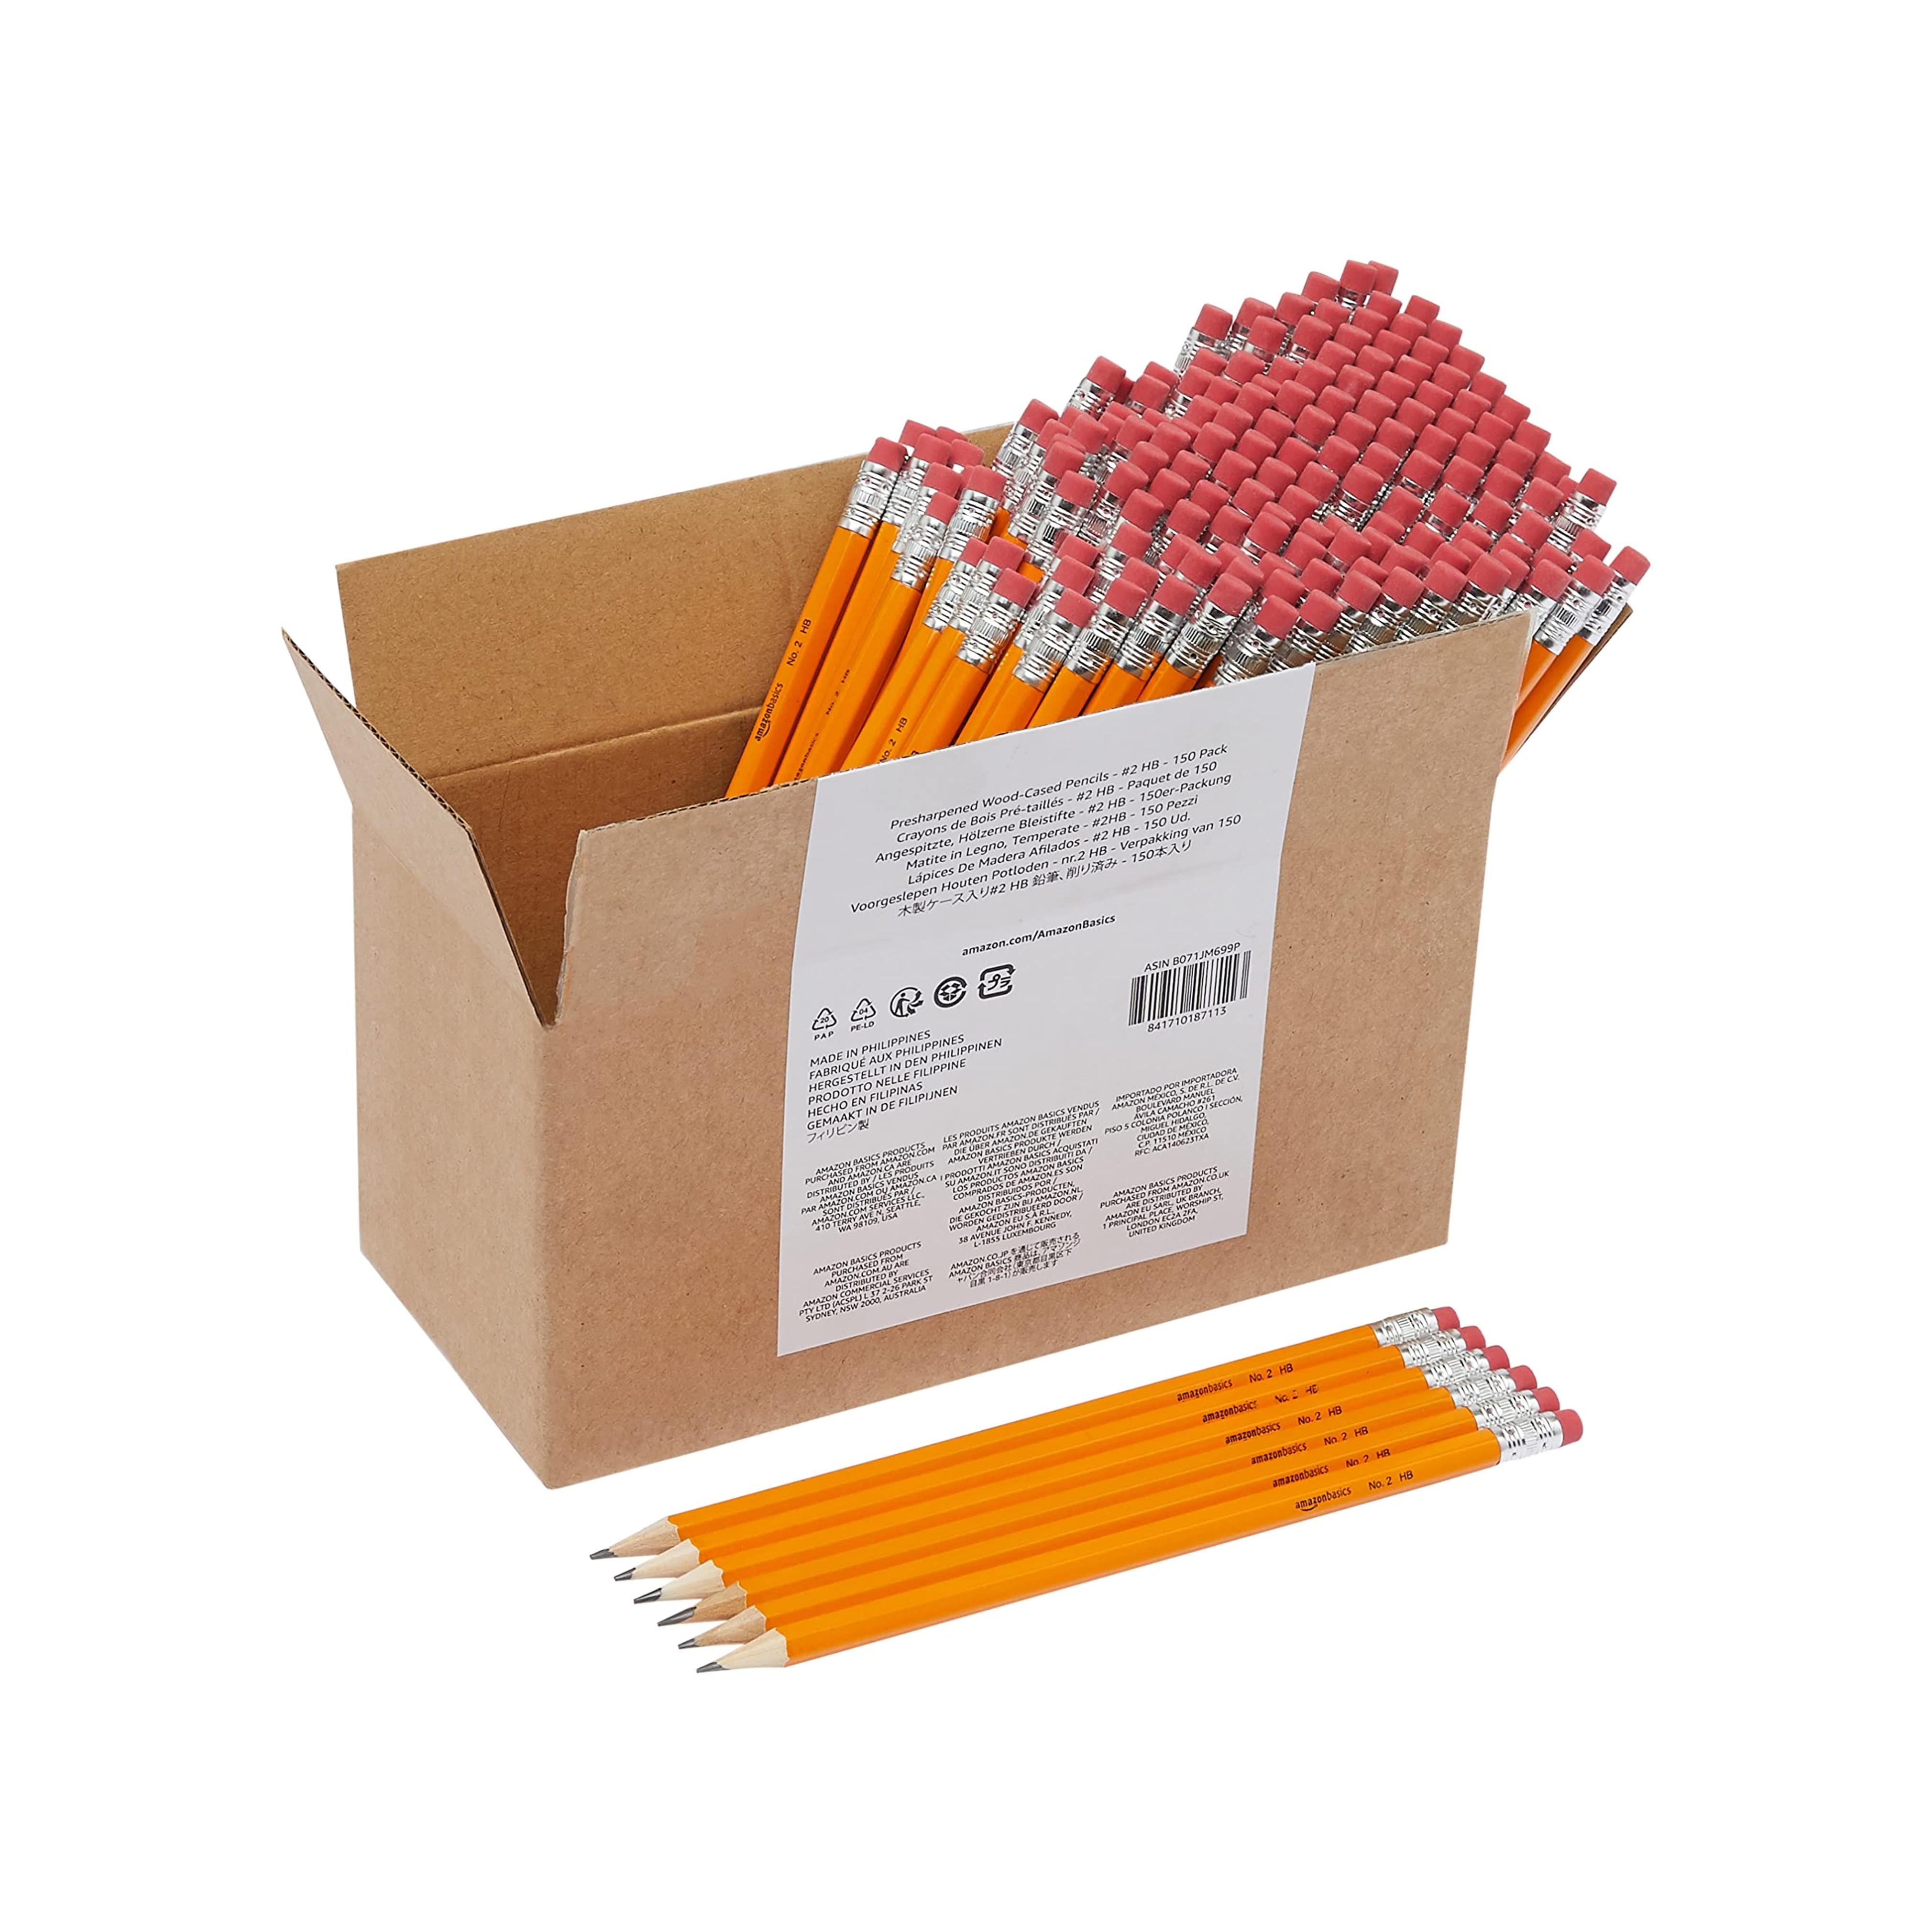 Amazon.com : Amazon Basics Woodcased #2 Pencils, Pre-sharpened, HB Lead - Box of 150, Bulk Box : Office Products